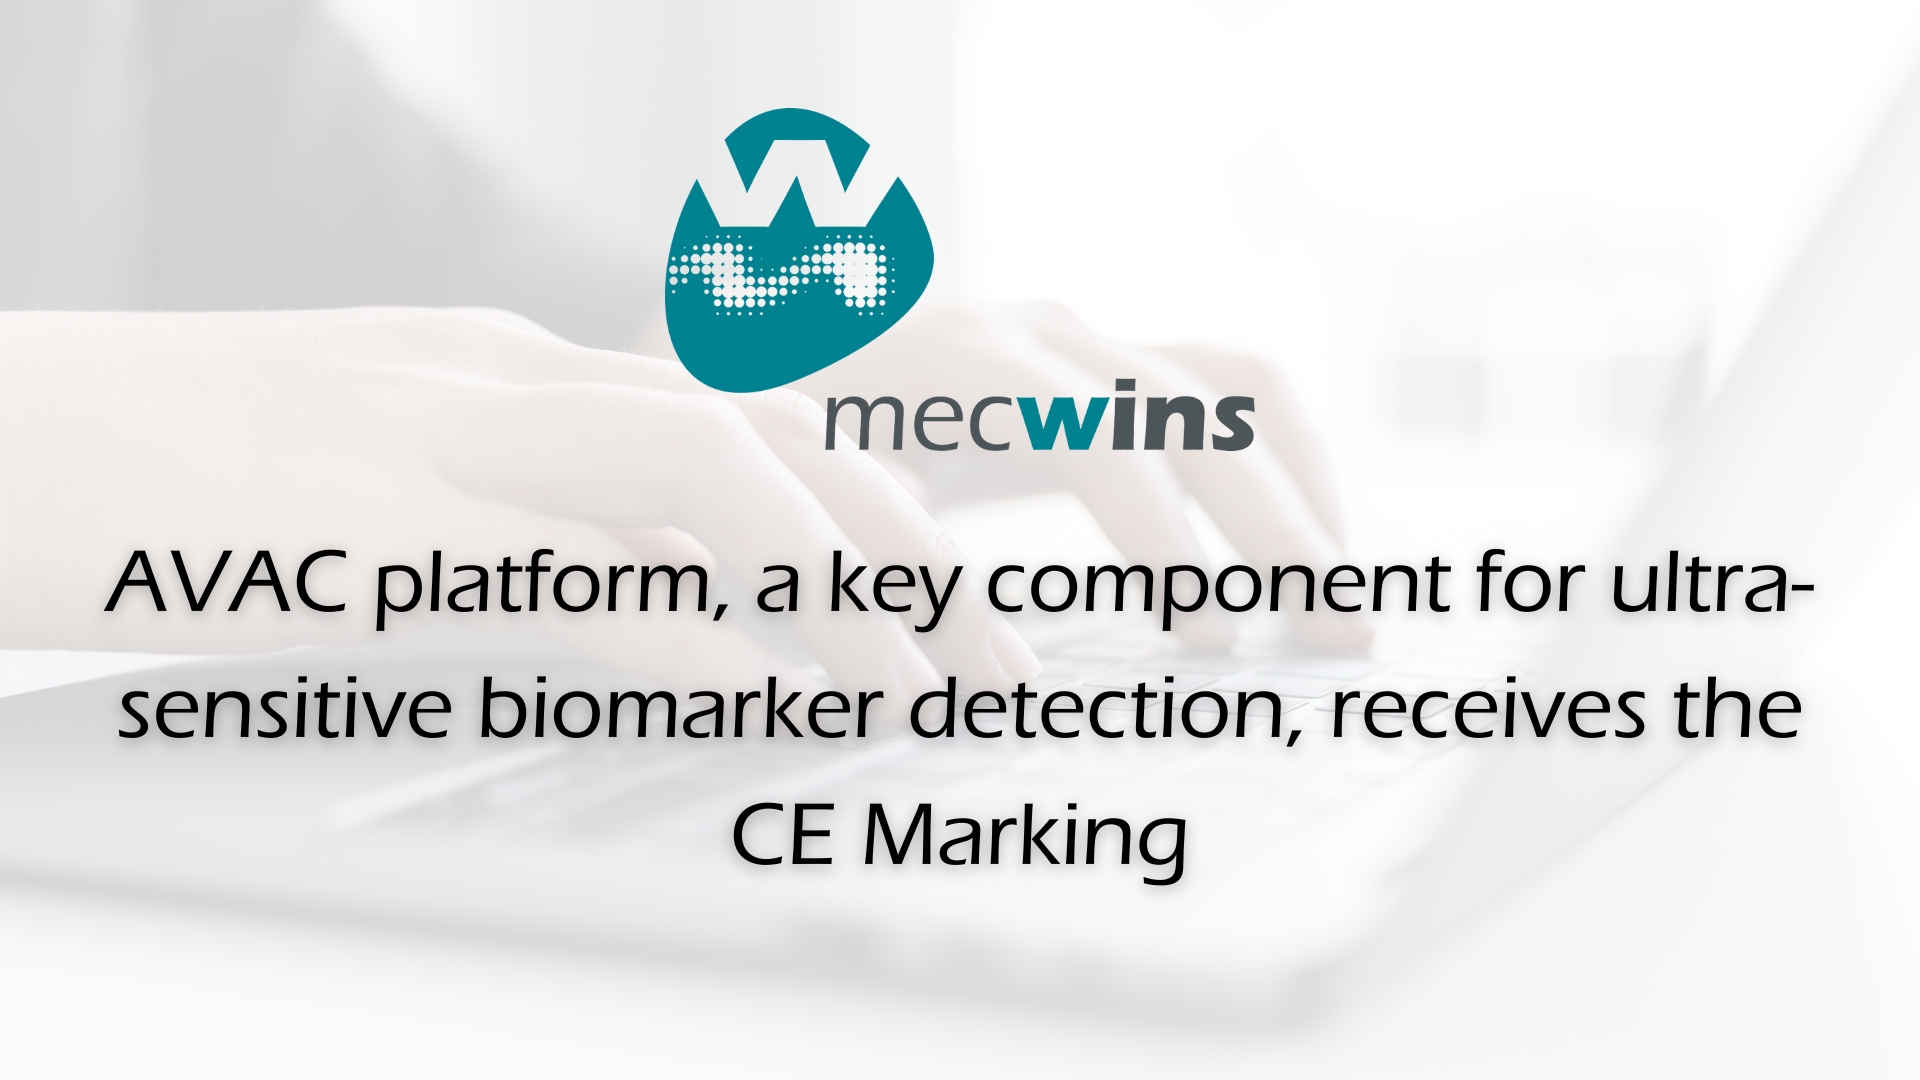 AVAC platform, a key component for ultra-sensitive biomarker detection, receives the CE Marking